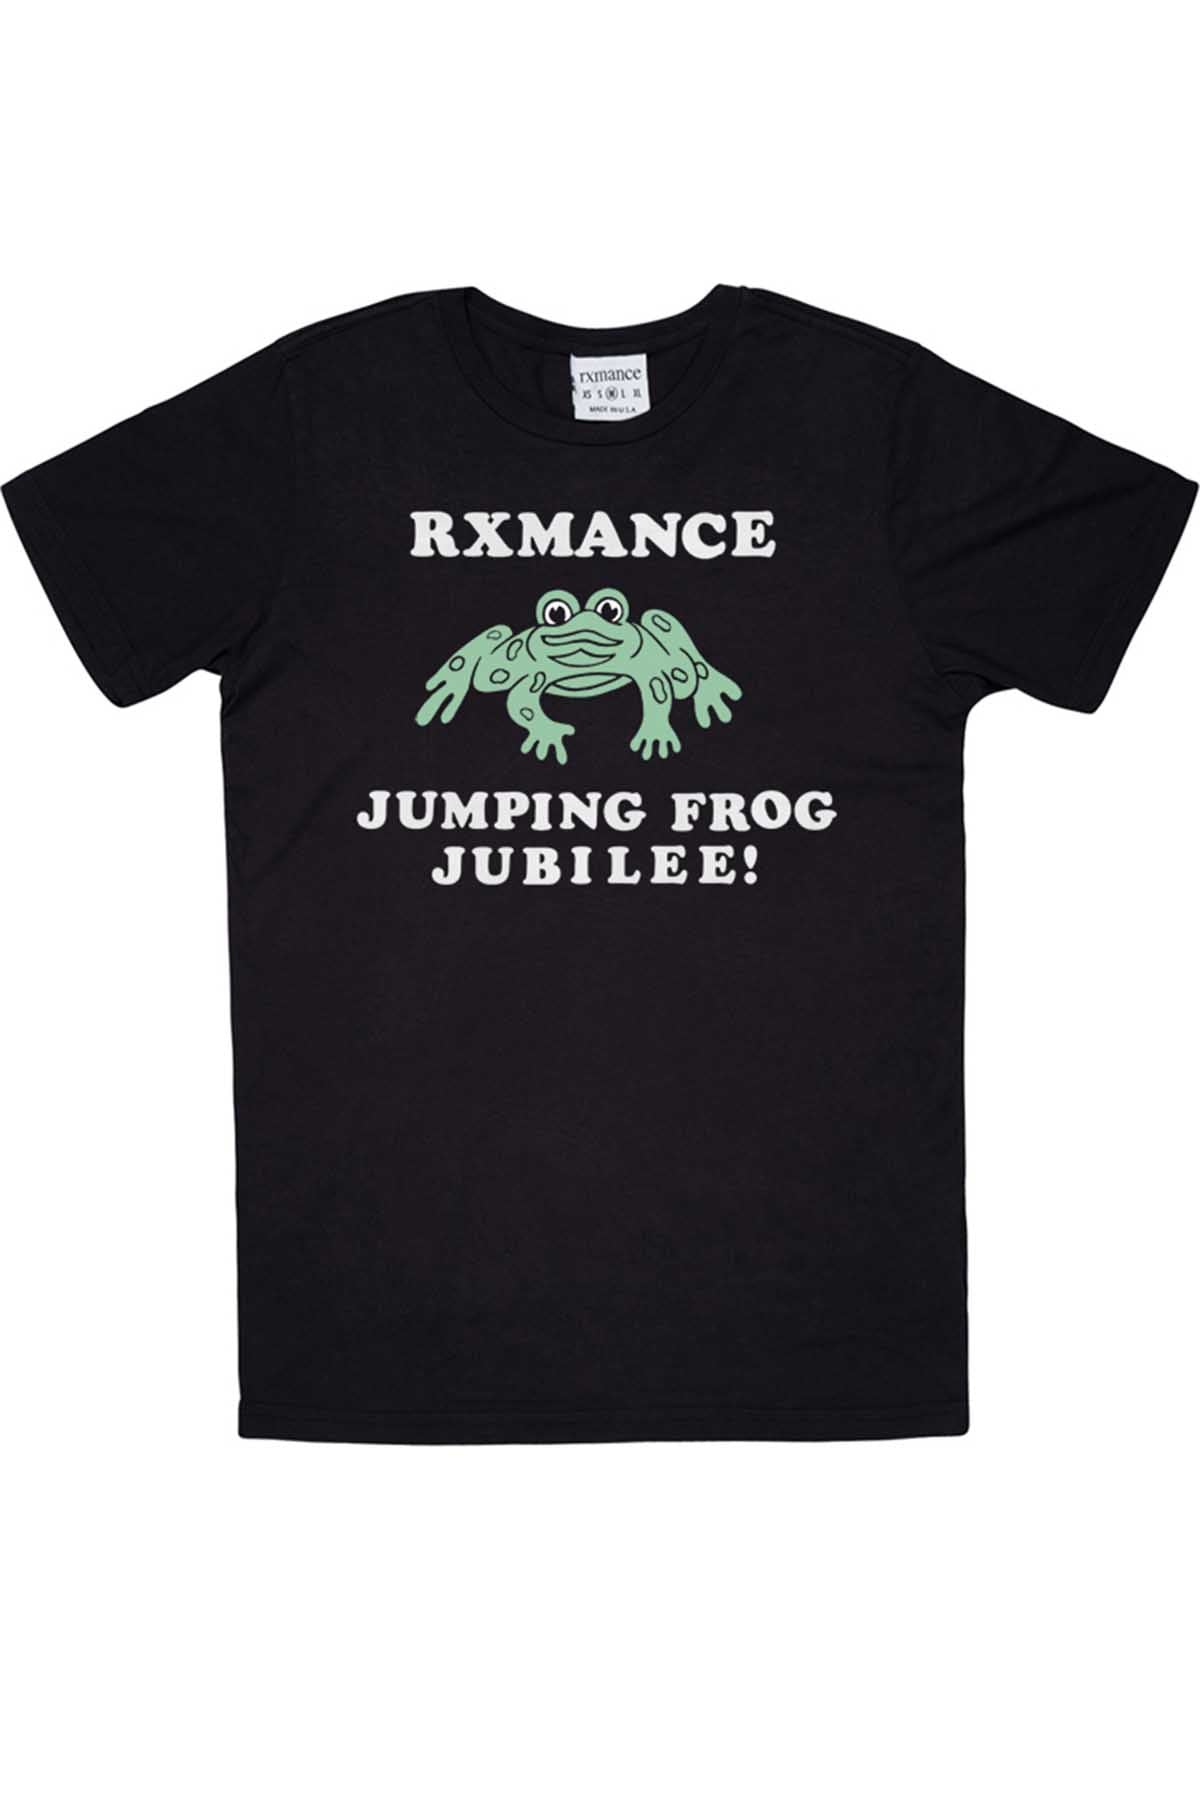 Rxmance Unisex Black 'Jumping Frog' Tee